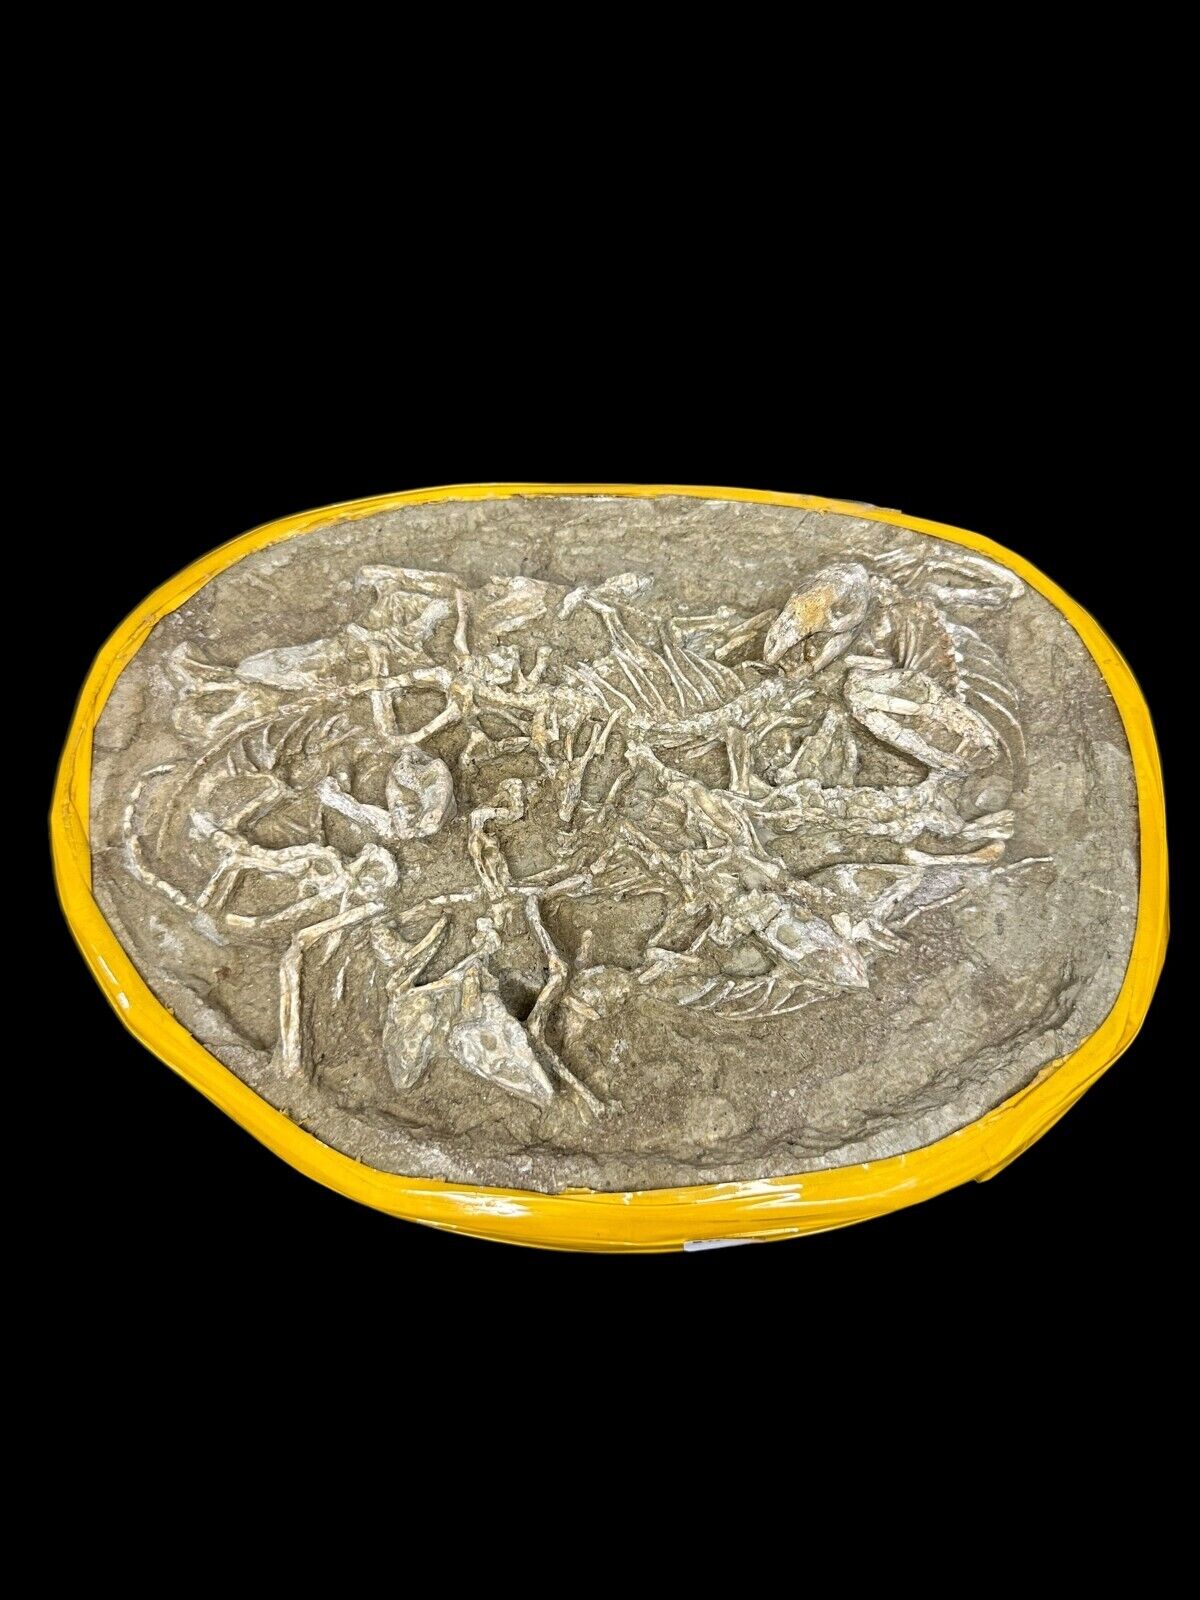 Repenomamus Nest (Last Known Mezozoic Mammal) Early Creataceous 125MYO - China